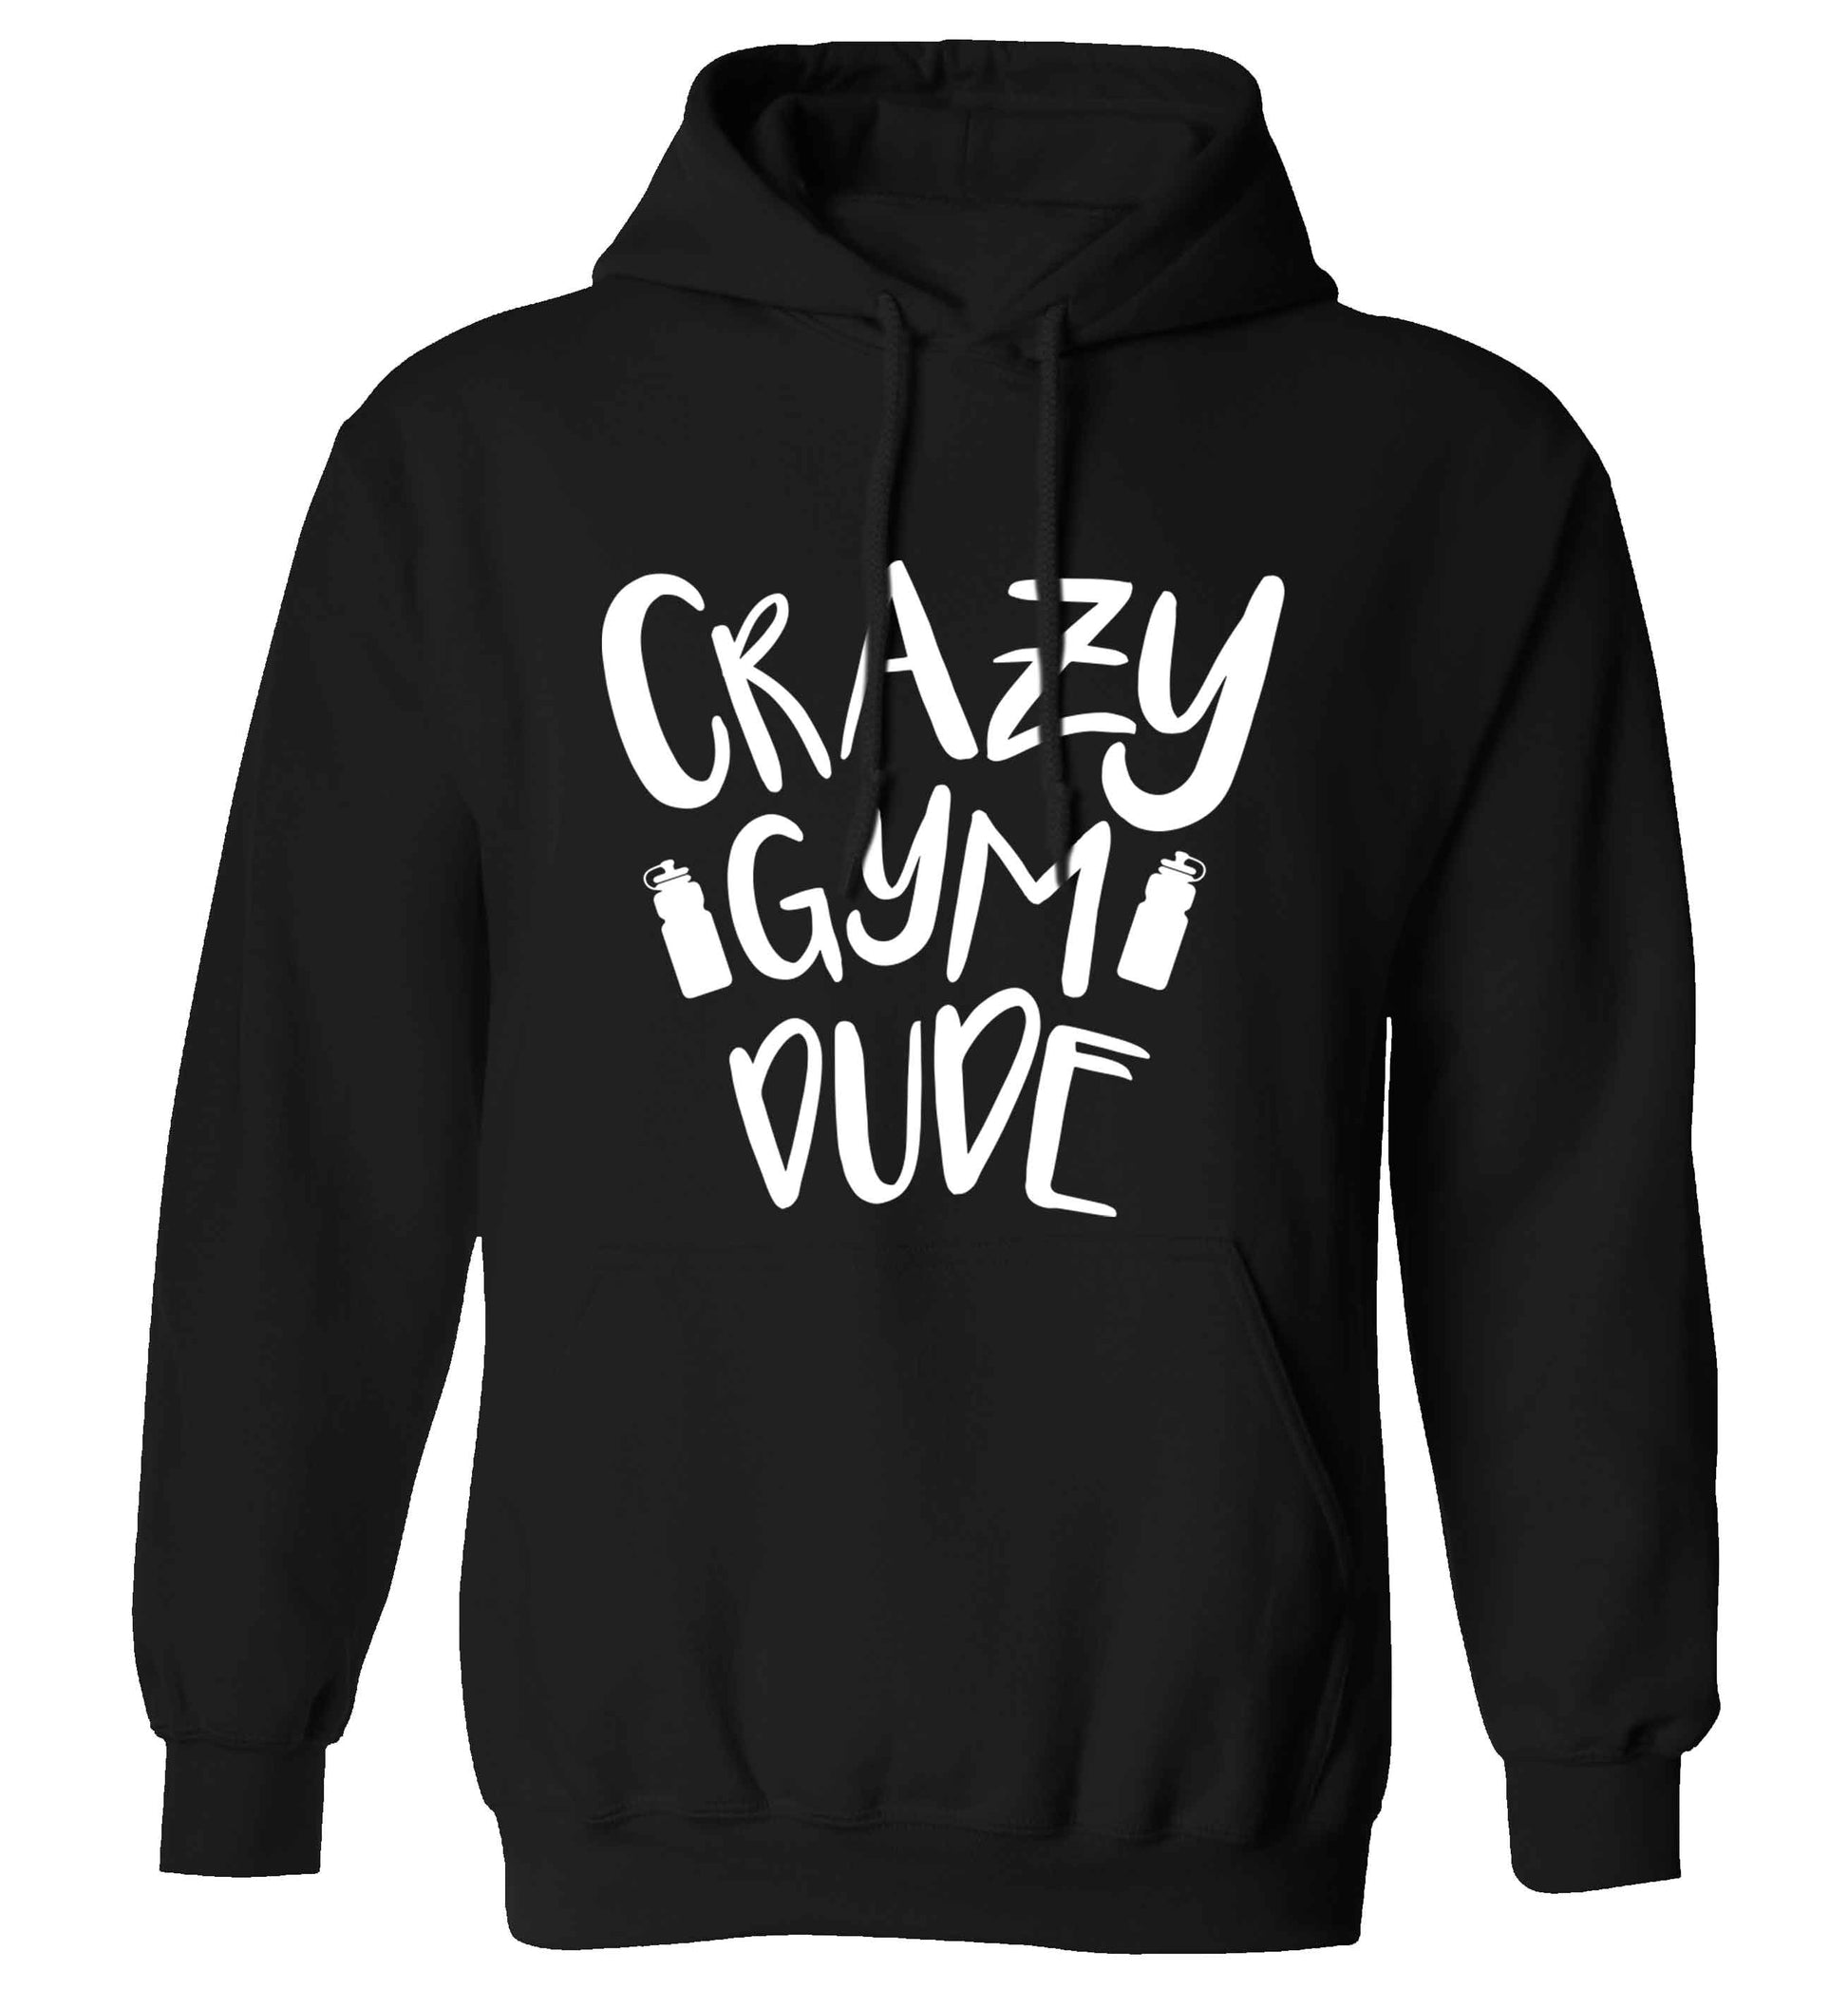 Crazy gym dude adults unisex black hoodie 2XL